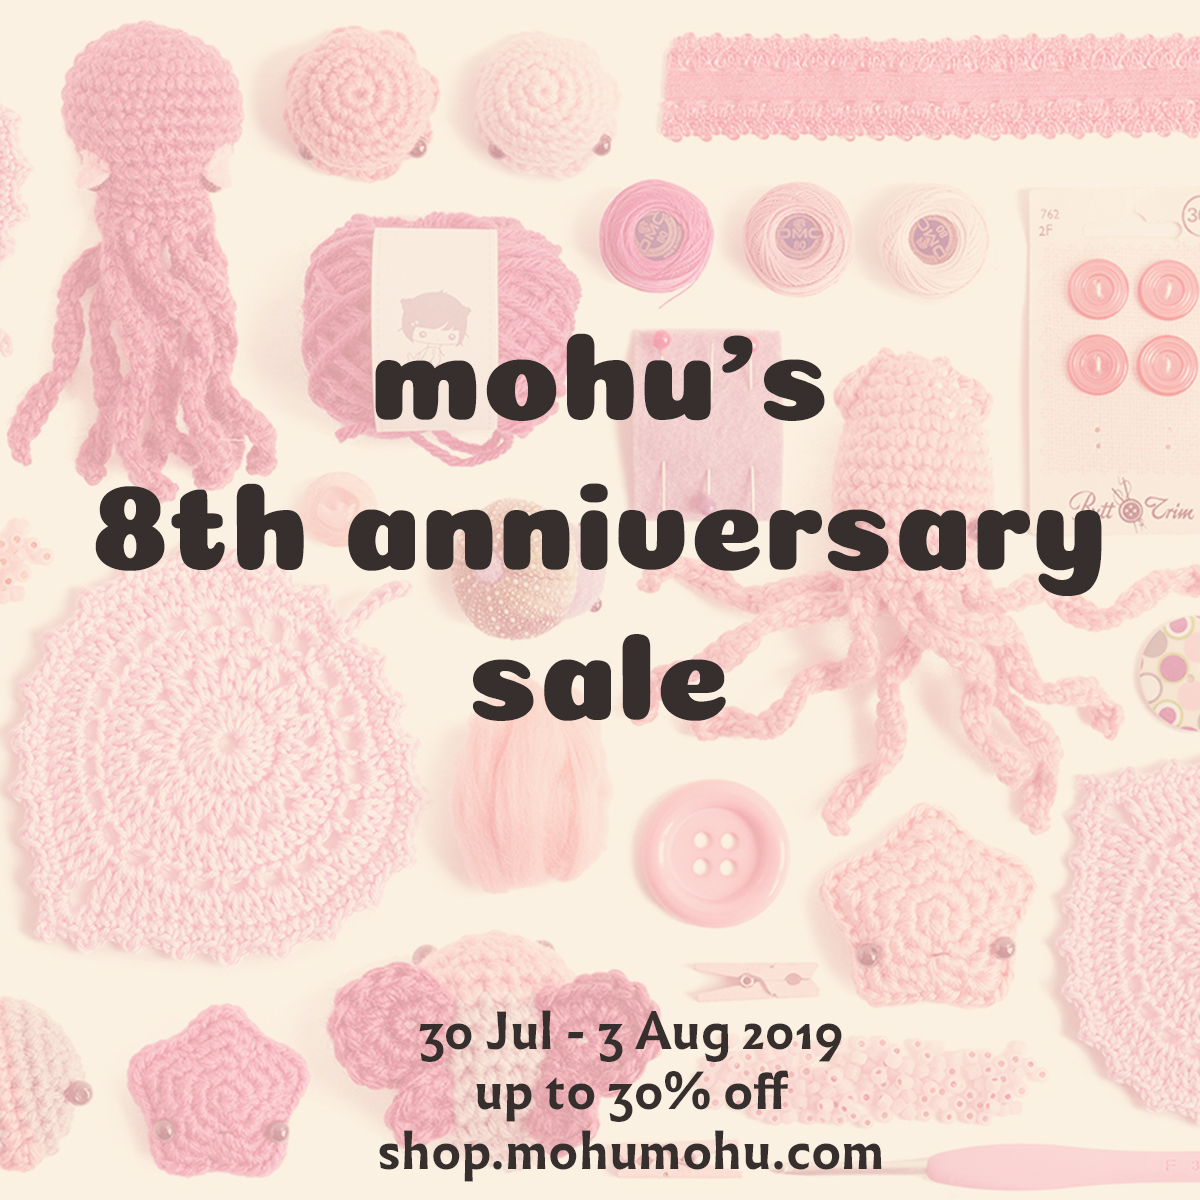 Mohu's 8th anniversary sale